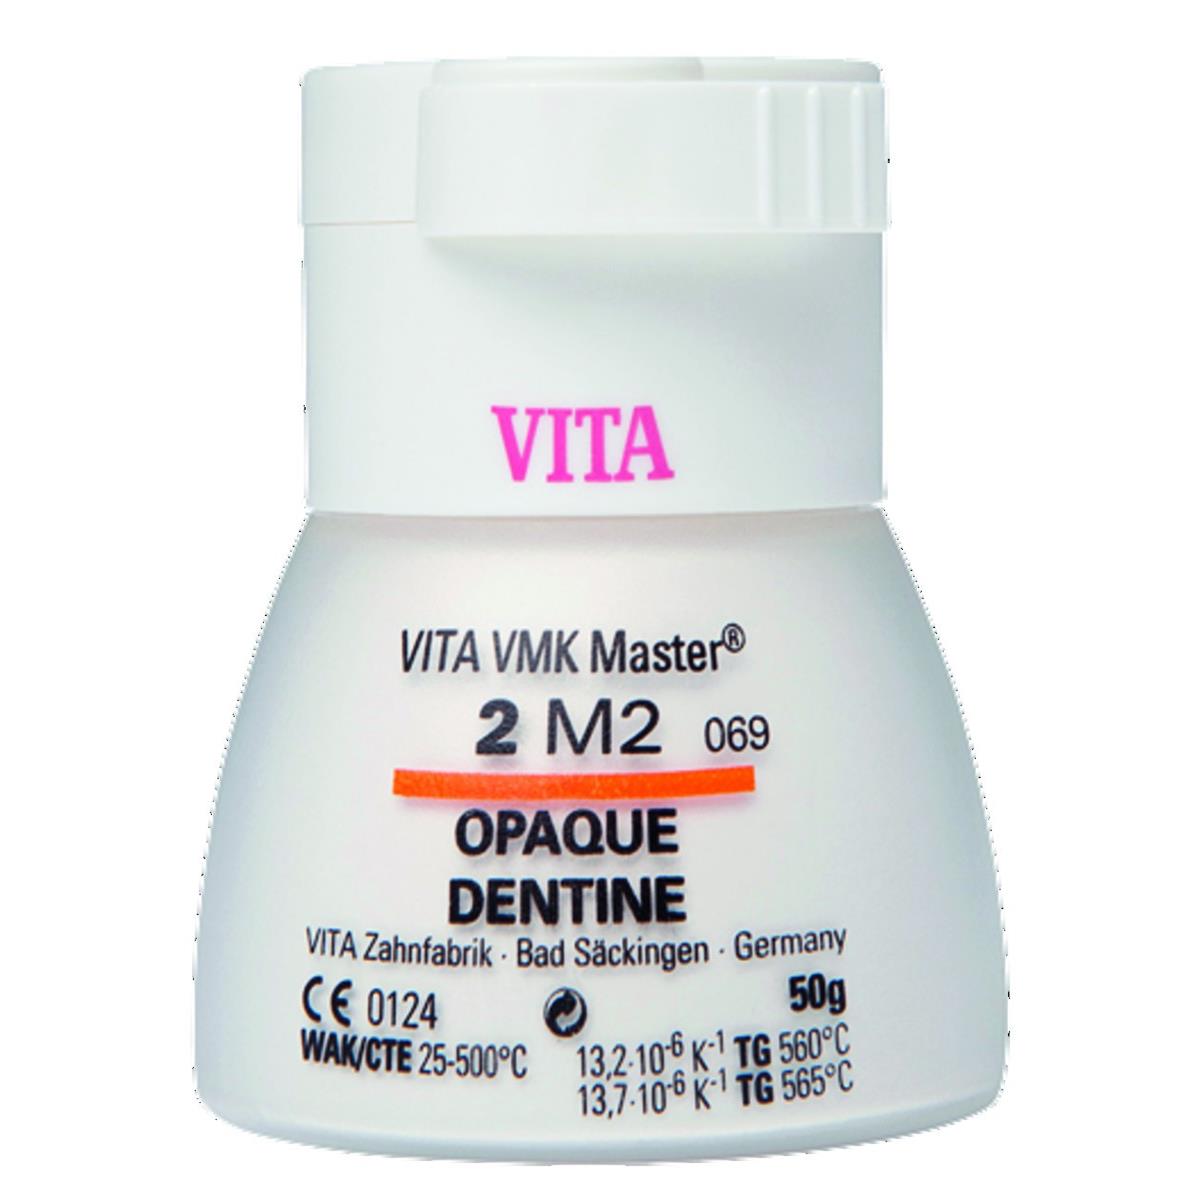 VMK Master VITA - Dentine Opaque - 5M1 - Le flacon de 50 g